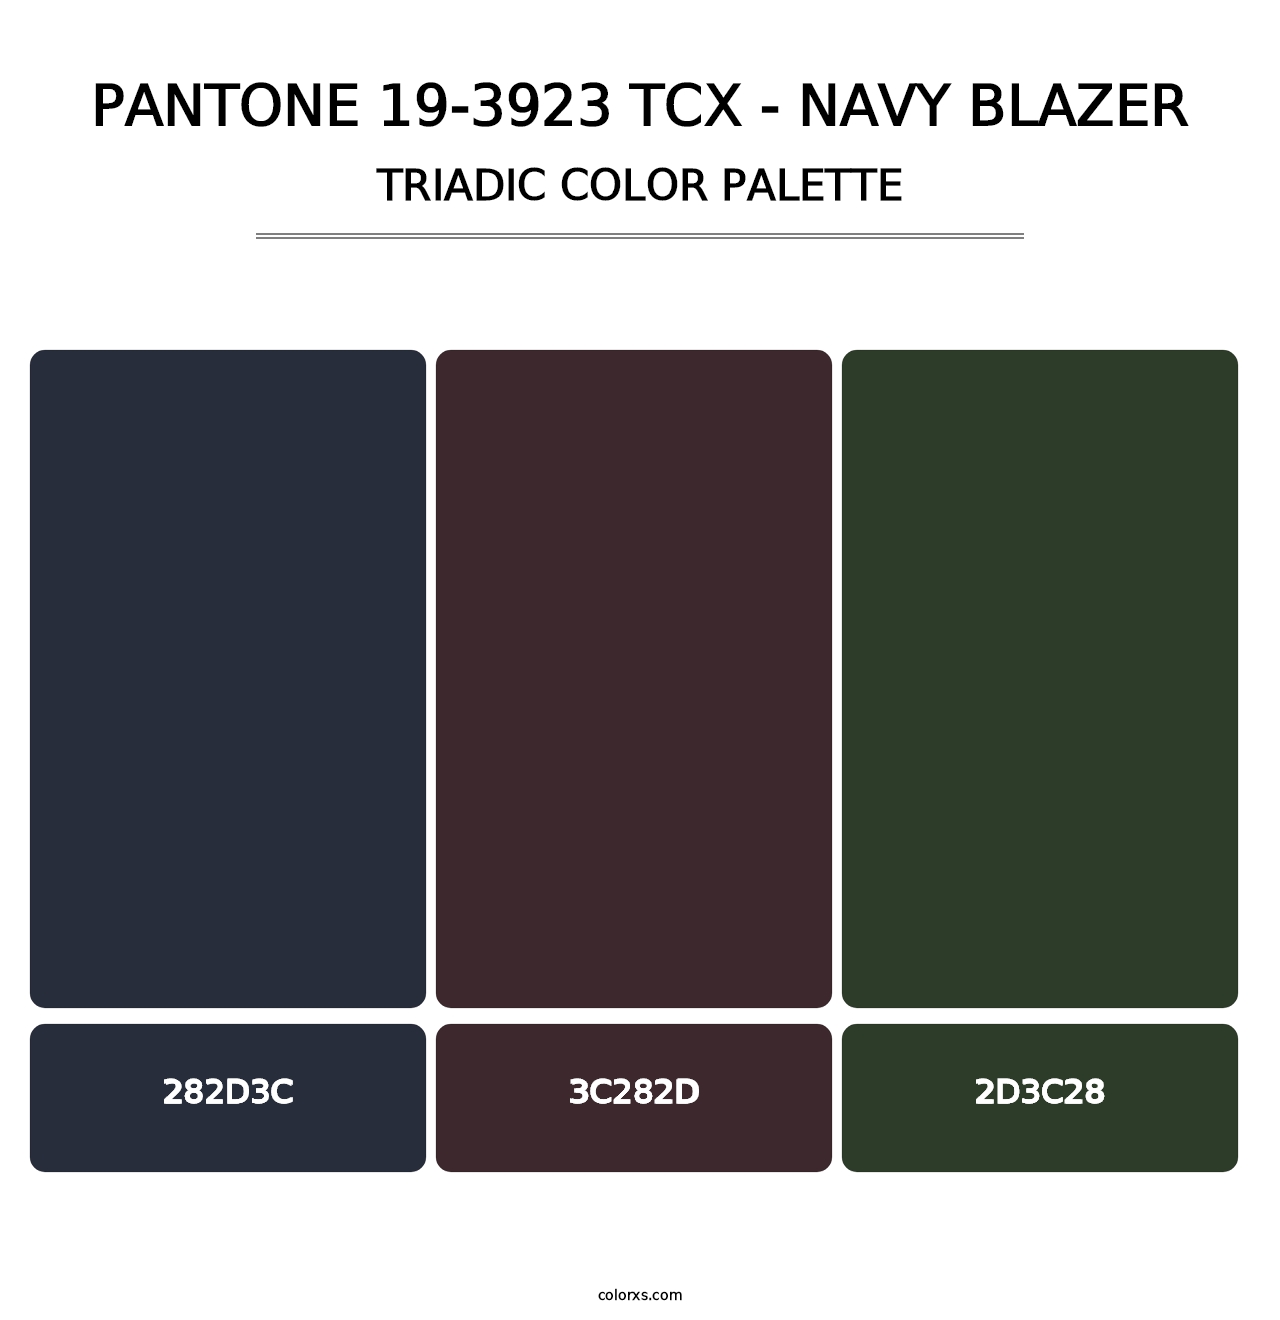 PANTONE 19-3923 TCX - Navy Blazer - Triadic Color Palette